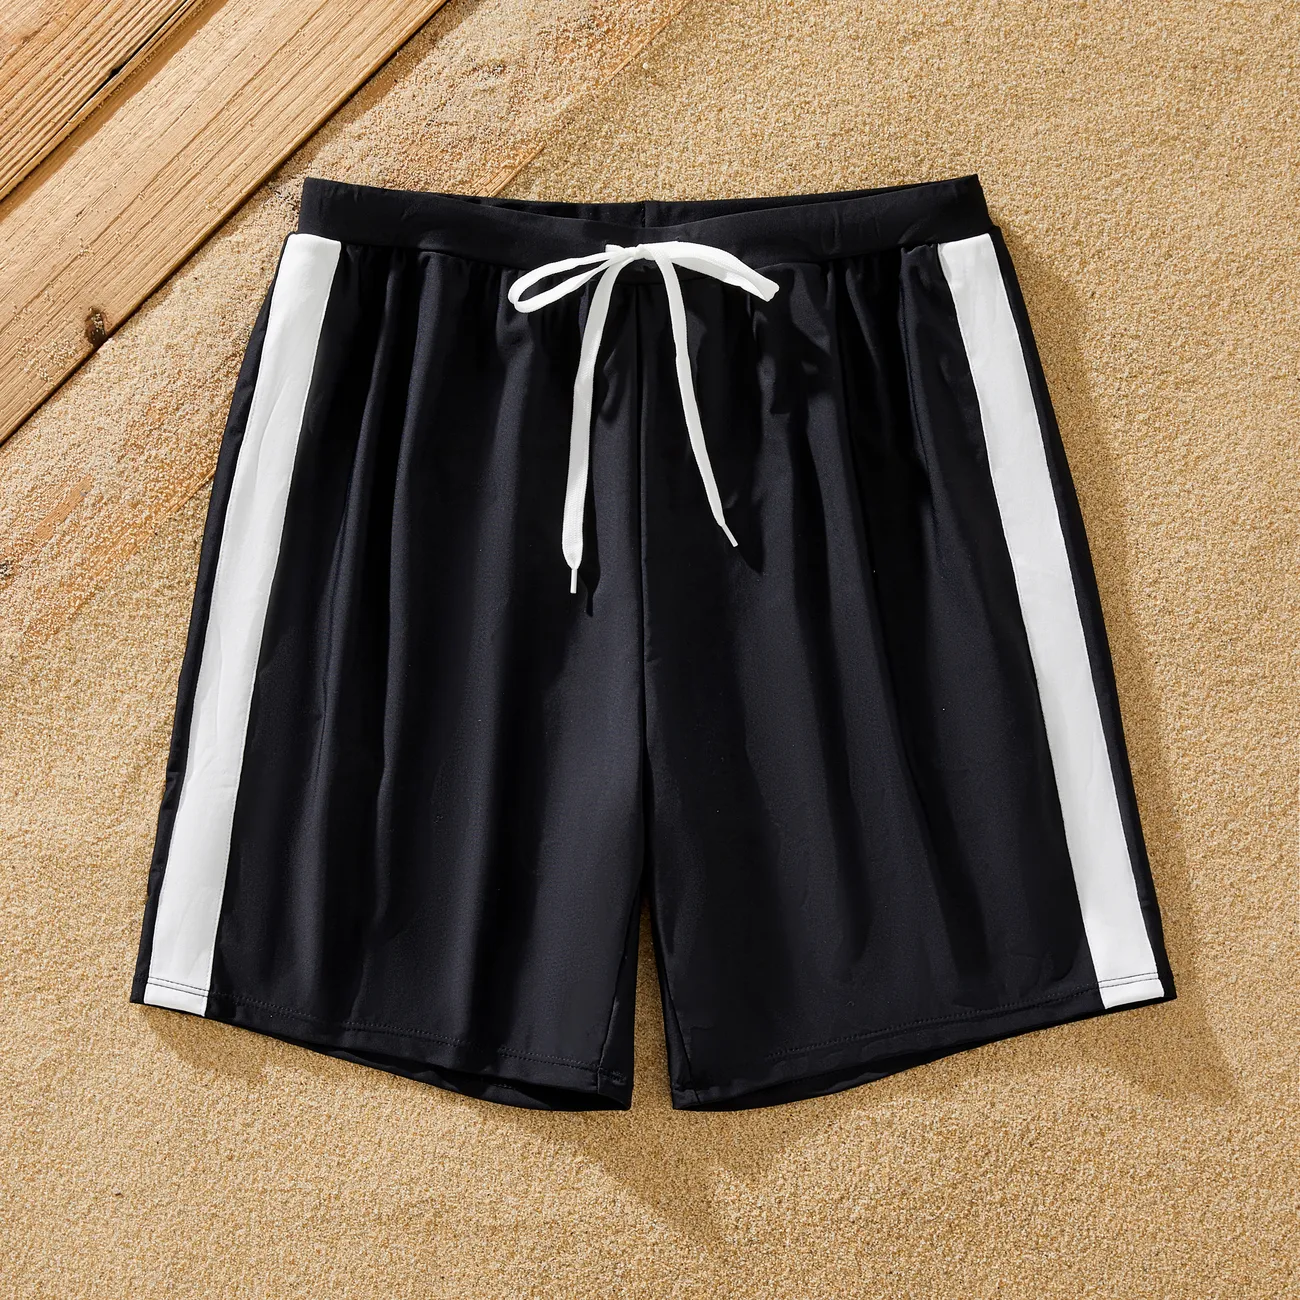 Family Matching Black Drawstring Swim Trunks or Bow knot One-Piece Strap Swimsuit BlackandWhite big image 1